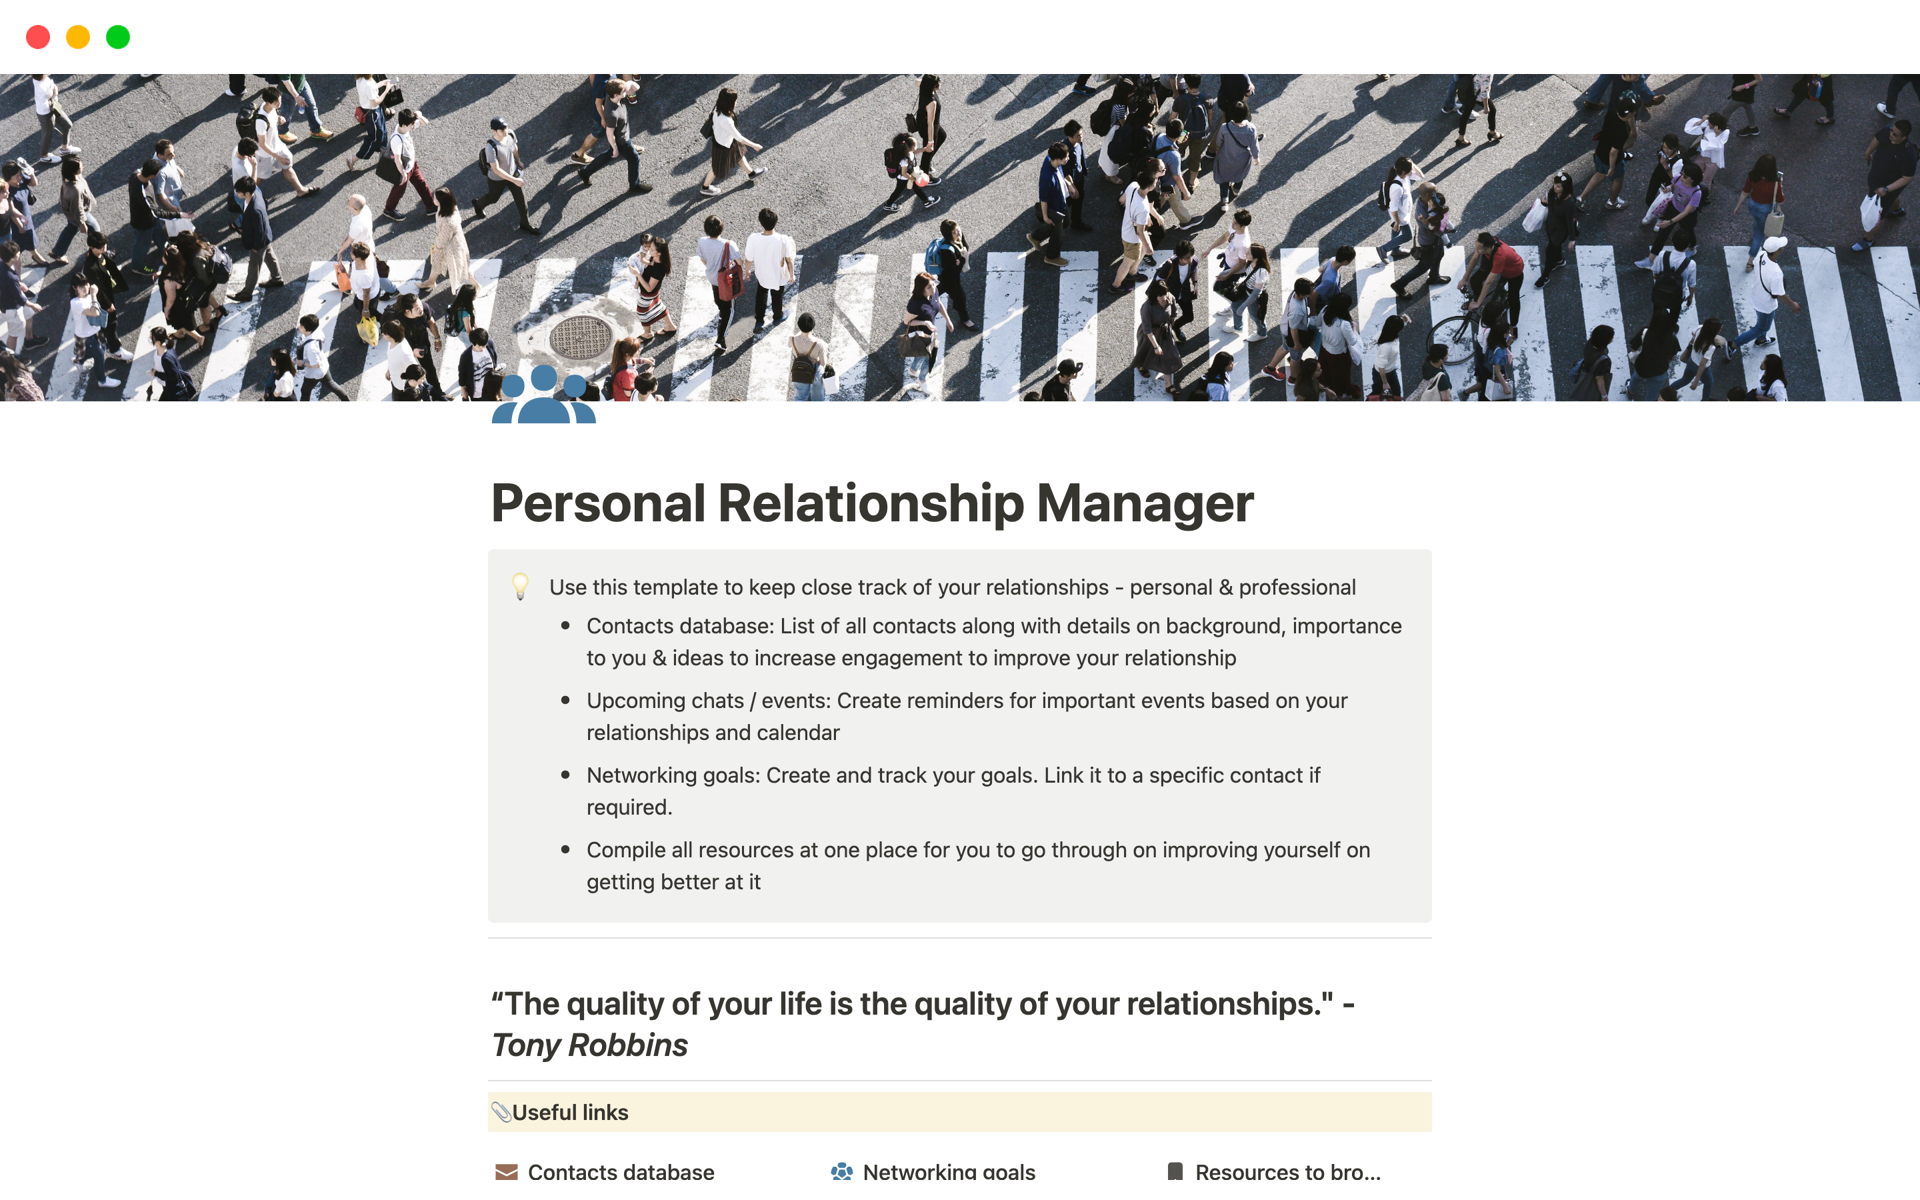 Vista previa de plantilla para Personal Relationship Manager